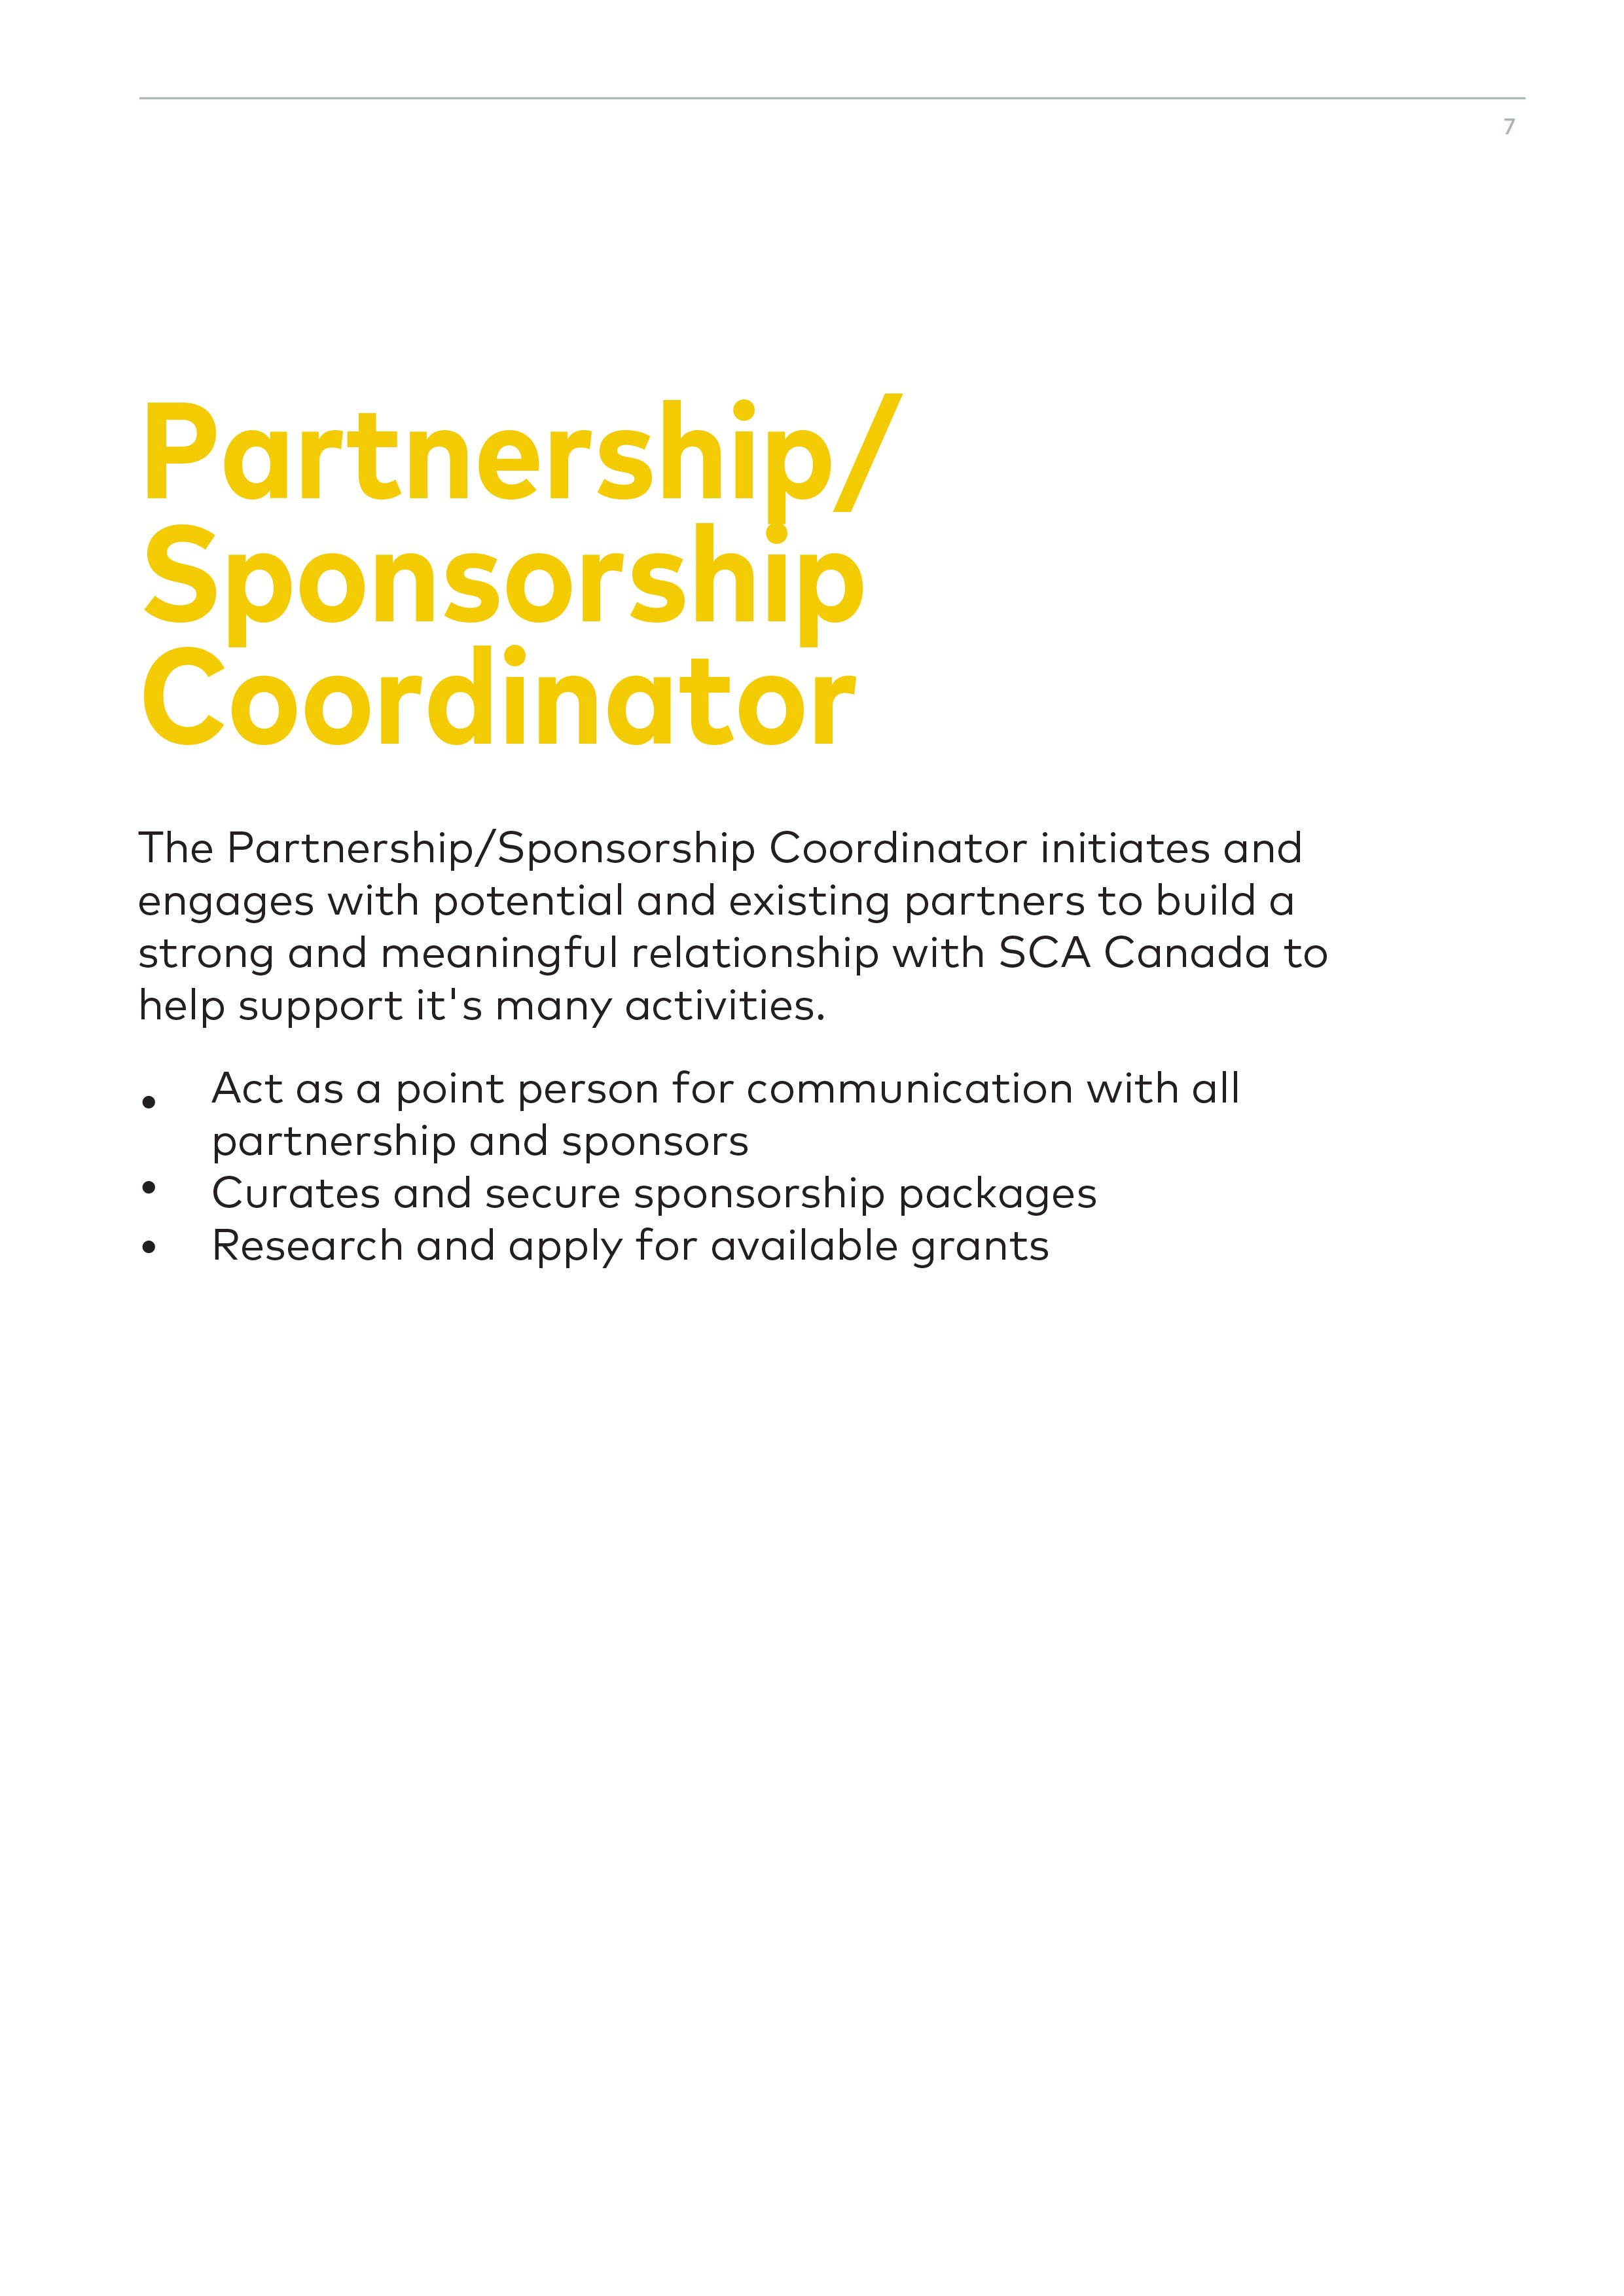 SCA_Canada_Chapter_Roles_Responsibilities_Partnership-Sponsorship.jpg